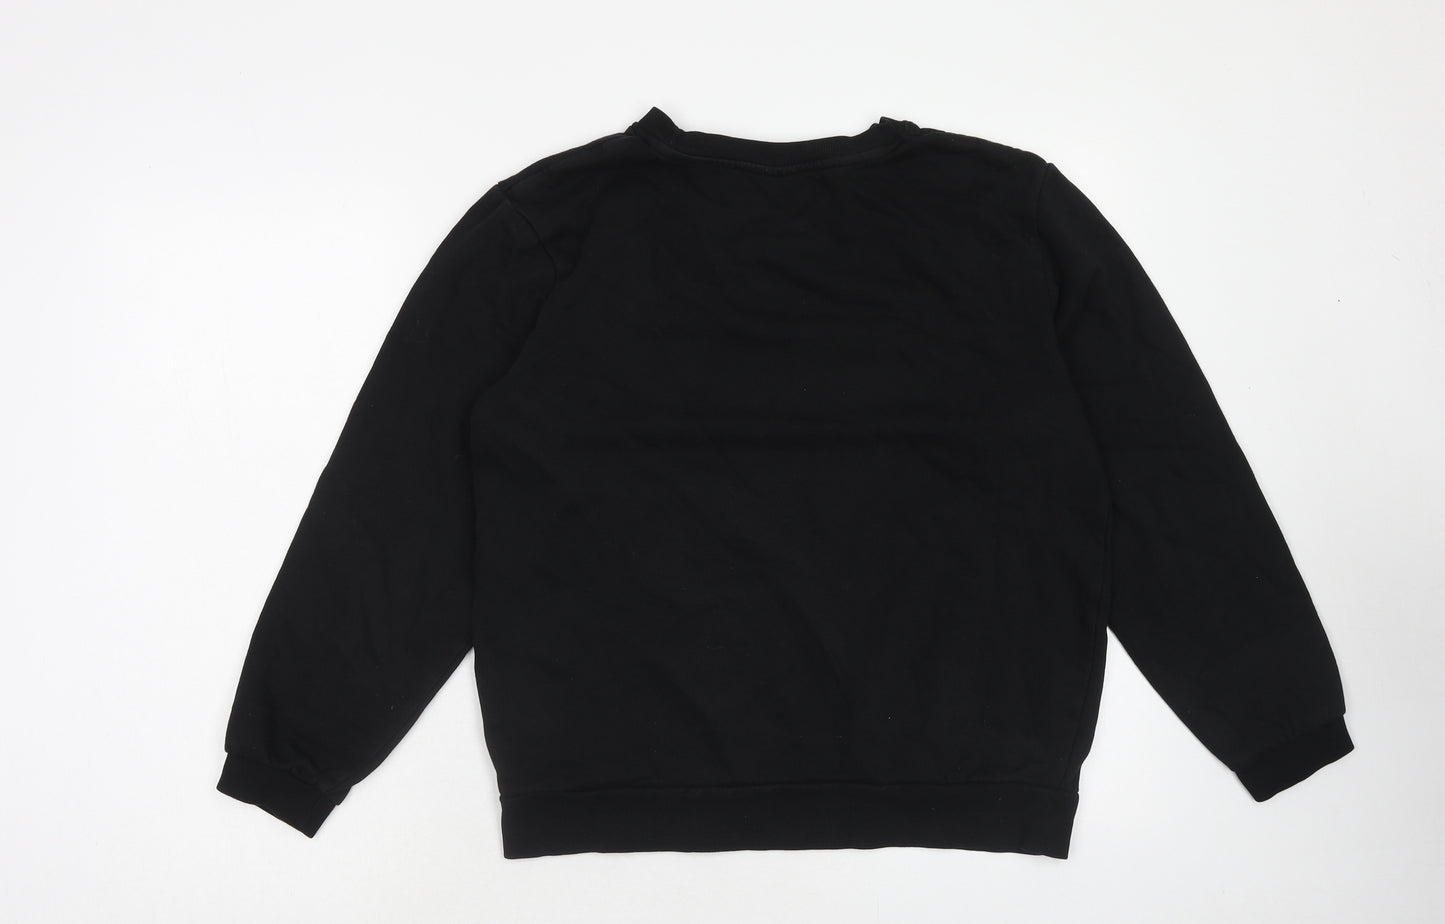 H&M Boys Black Cotton Pullover Sweatshirt Size 12 Years Pullover